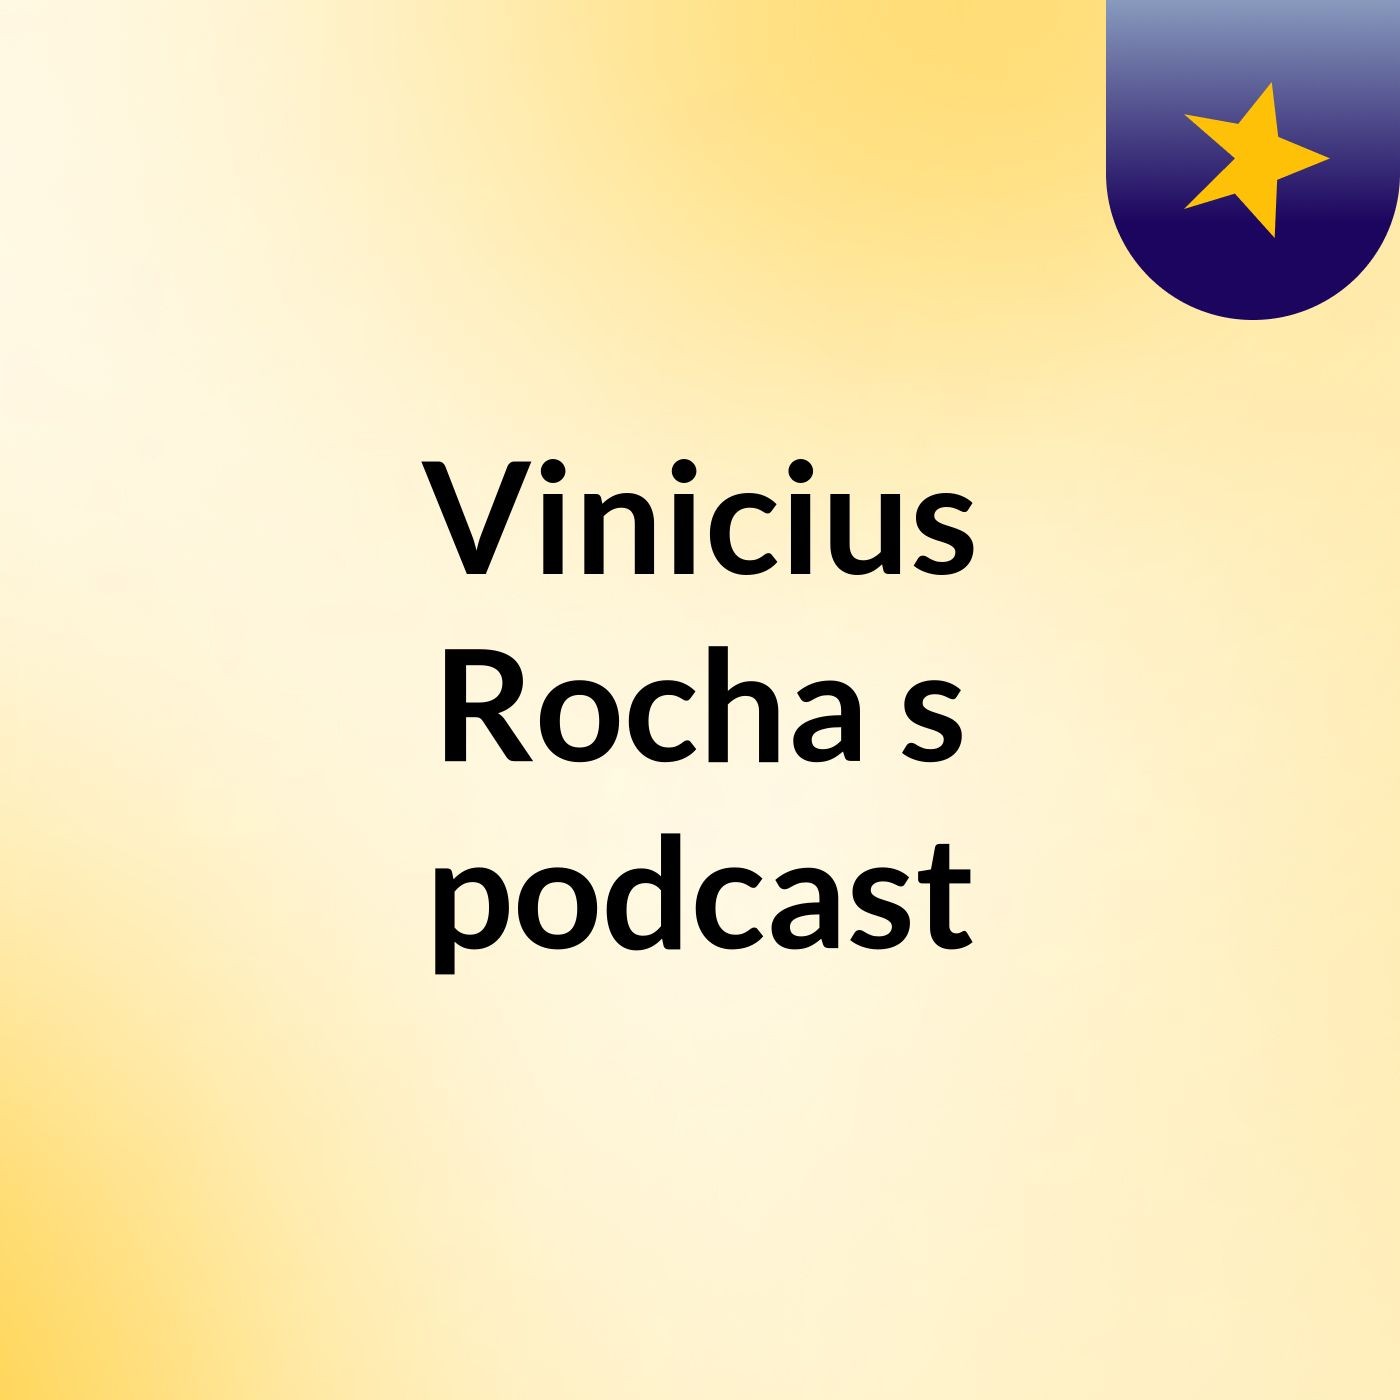 Vinicius Rocha's podcast